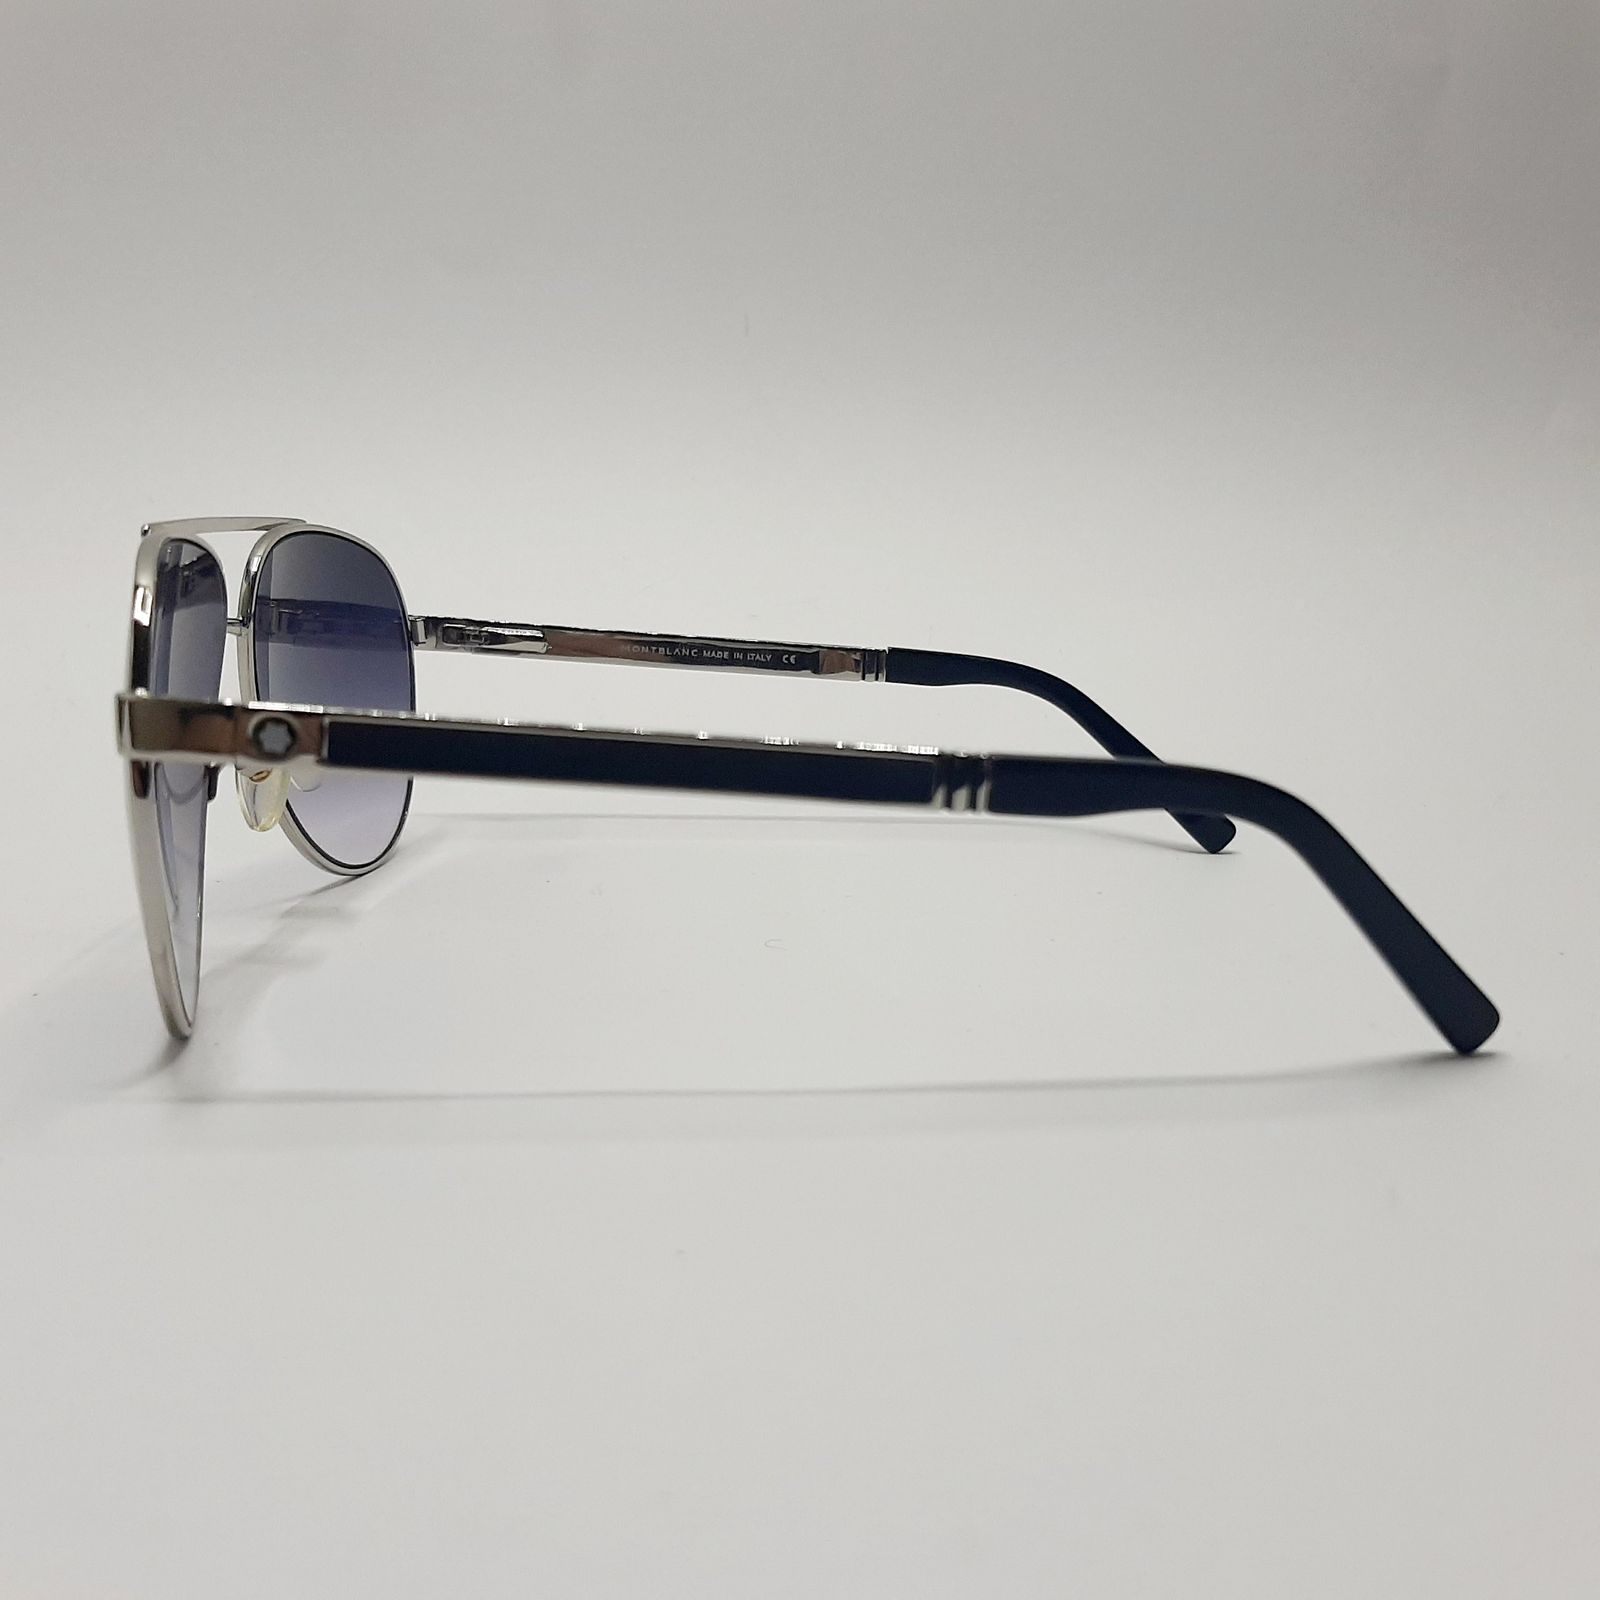 عینک آفتابی مون بلان مدل MB904c05 -  - 5